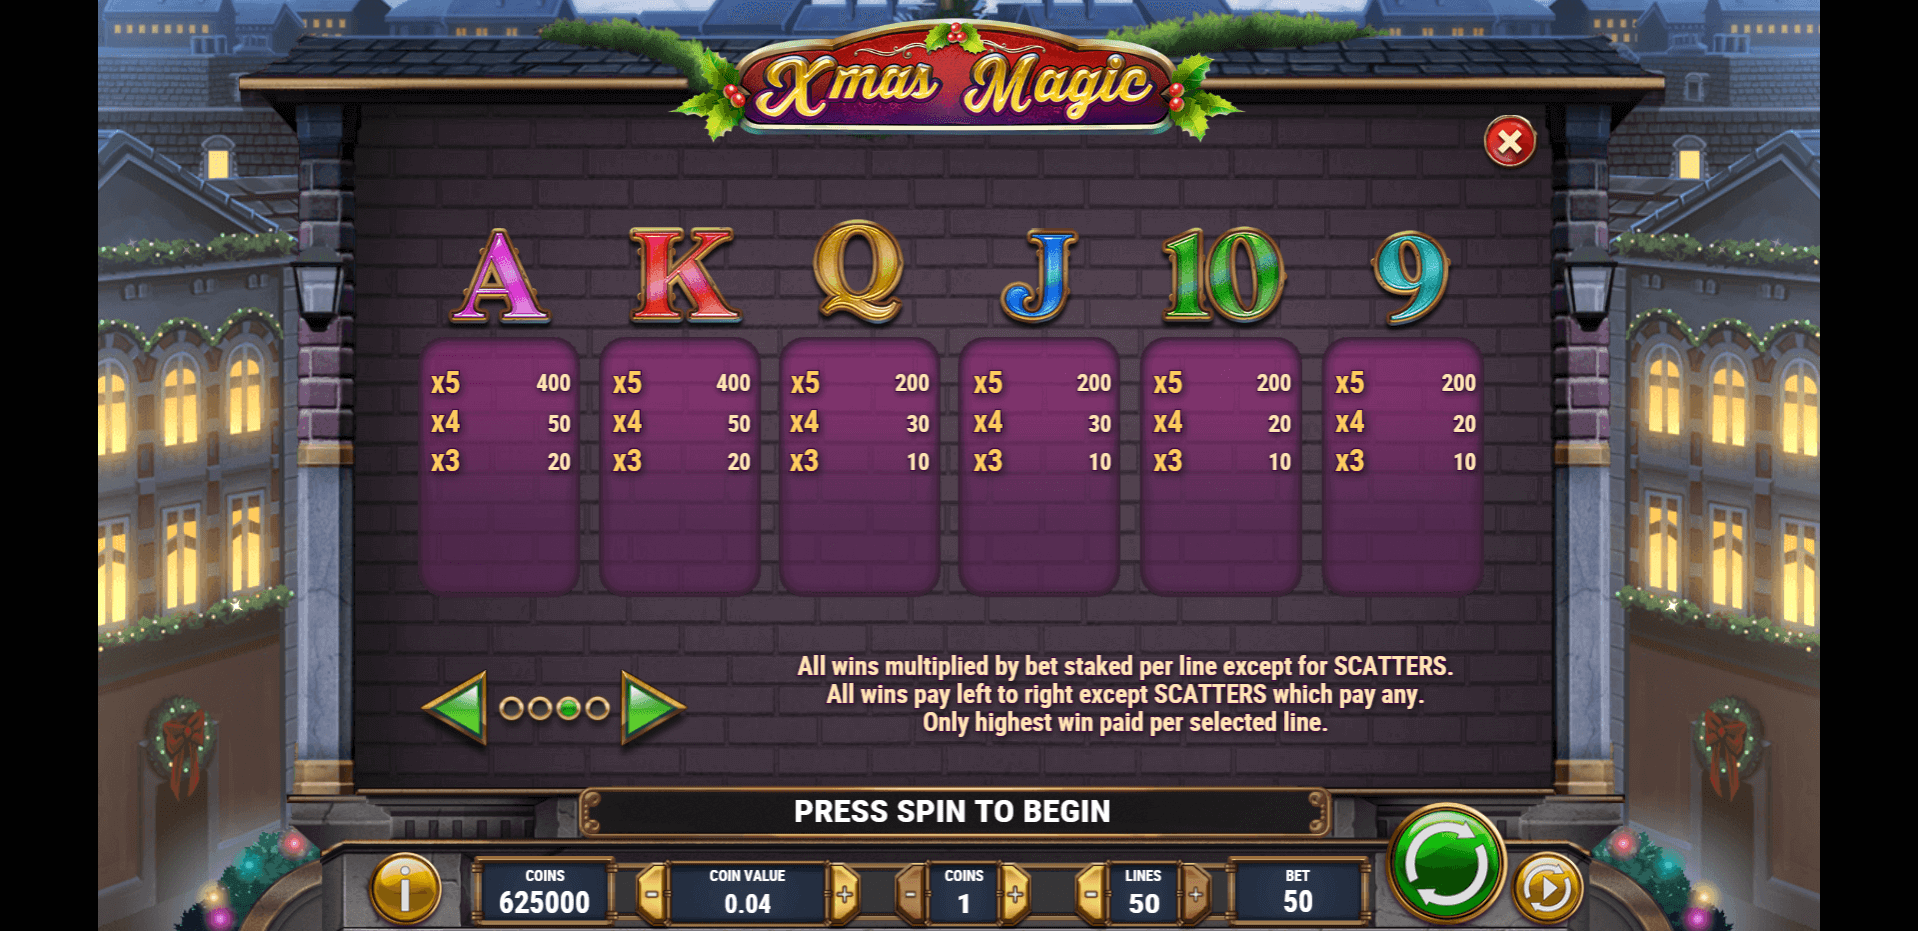 xmas magic slot machine detail image 2